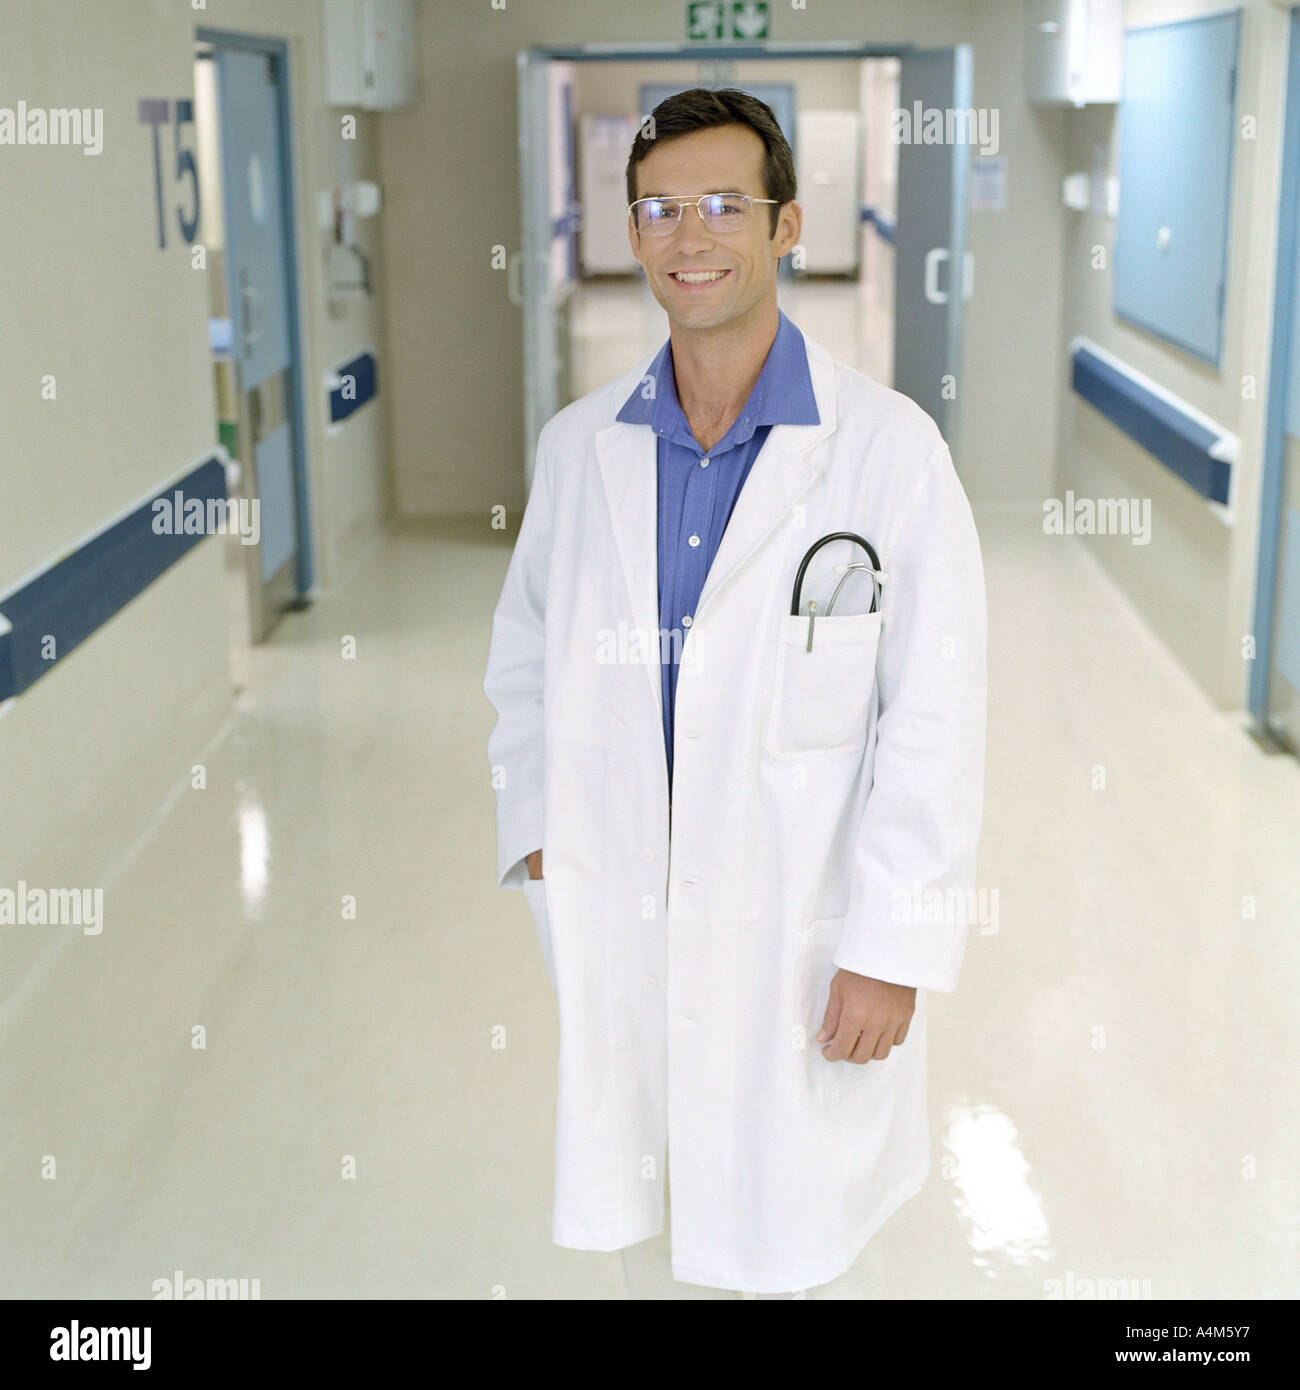 Doctor standing in hospital corridor Banque D'Images